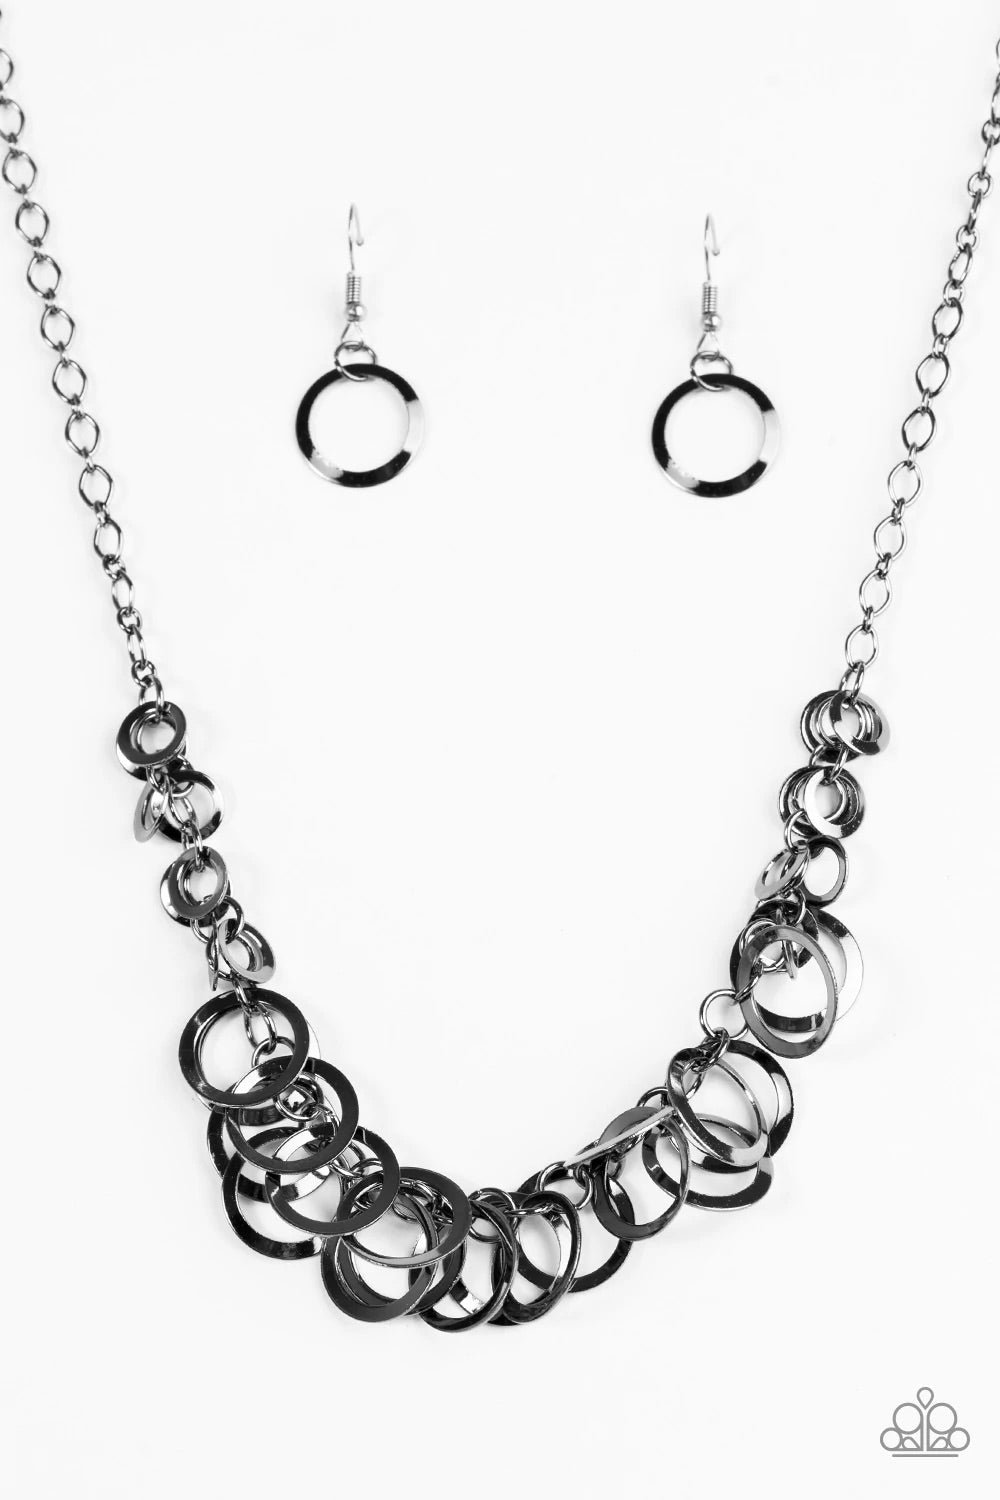 Paparazzi Accessories  - Royal Circus #L102 - Black Necklace